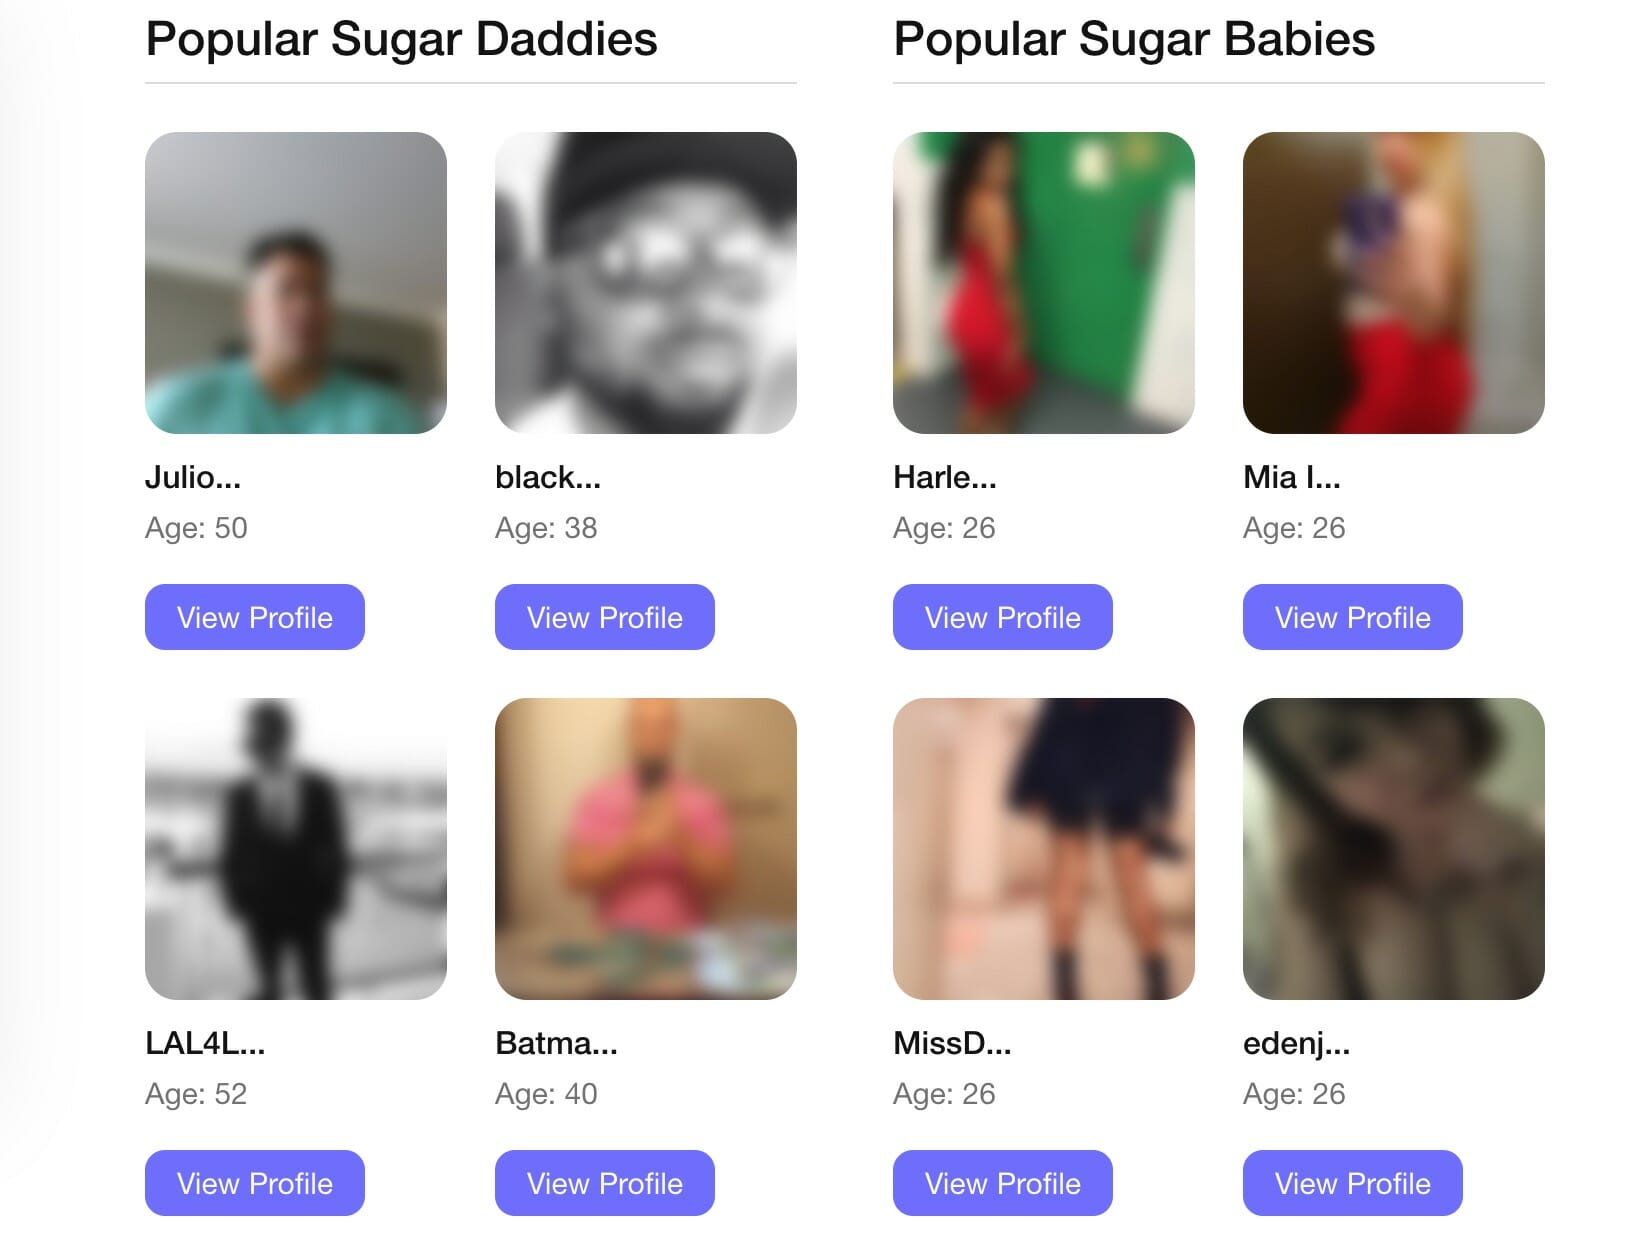 Sugardaddy.com users